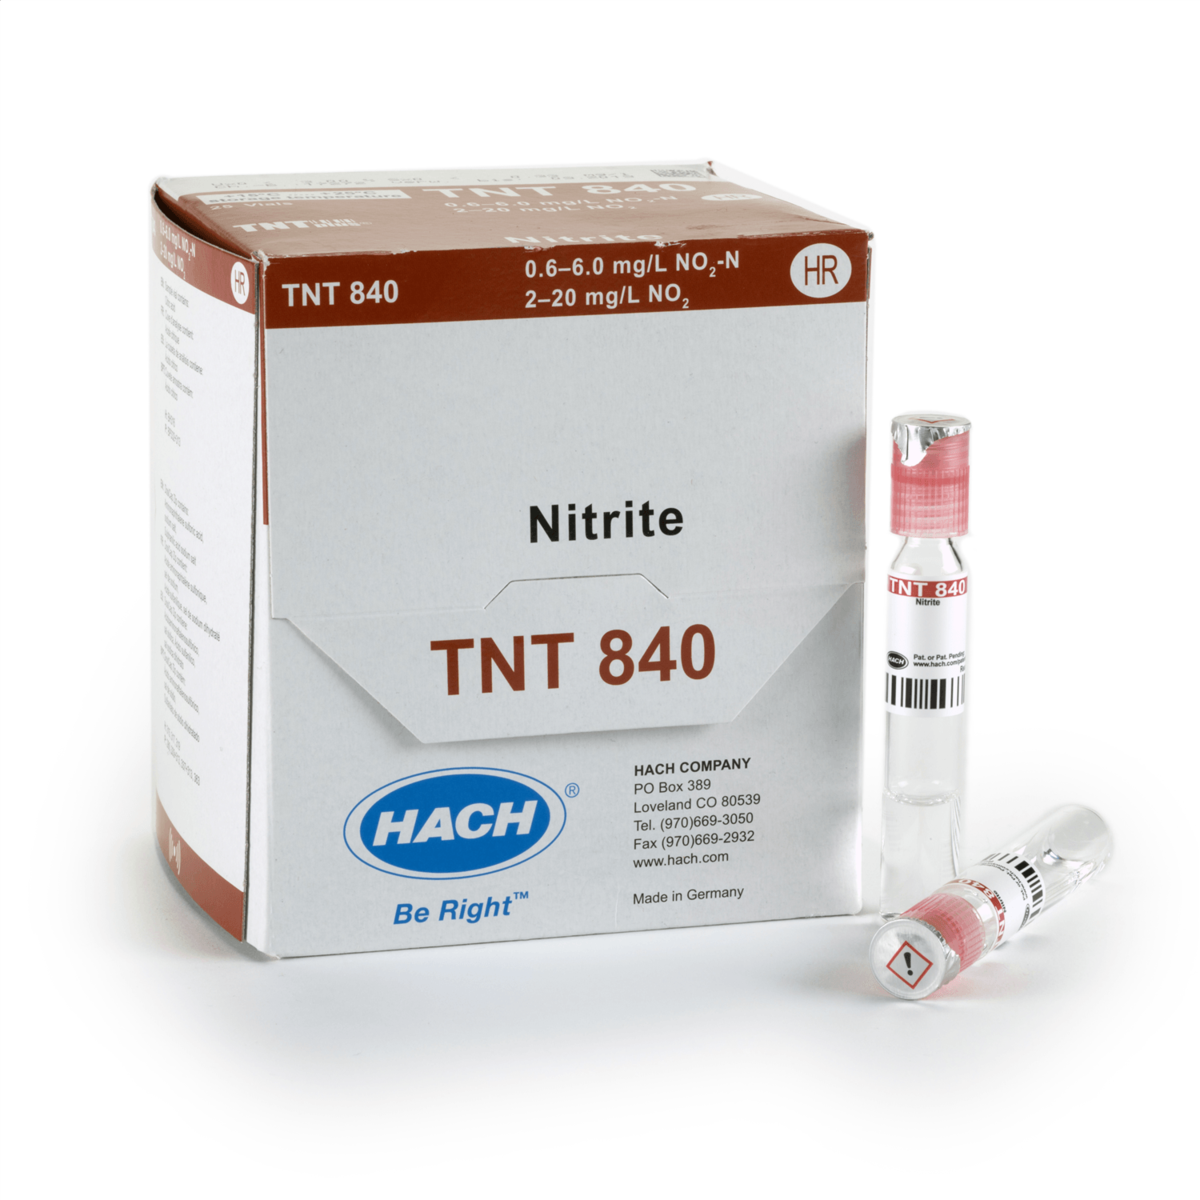 Hach Nitrite TNTplus Vial Test, HR, 0.6-6.0 mg/L NO₂-N , 25 Tests, TNT840